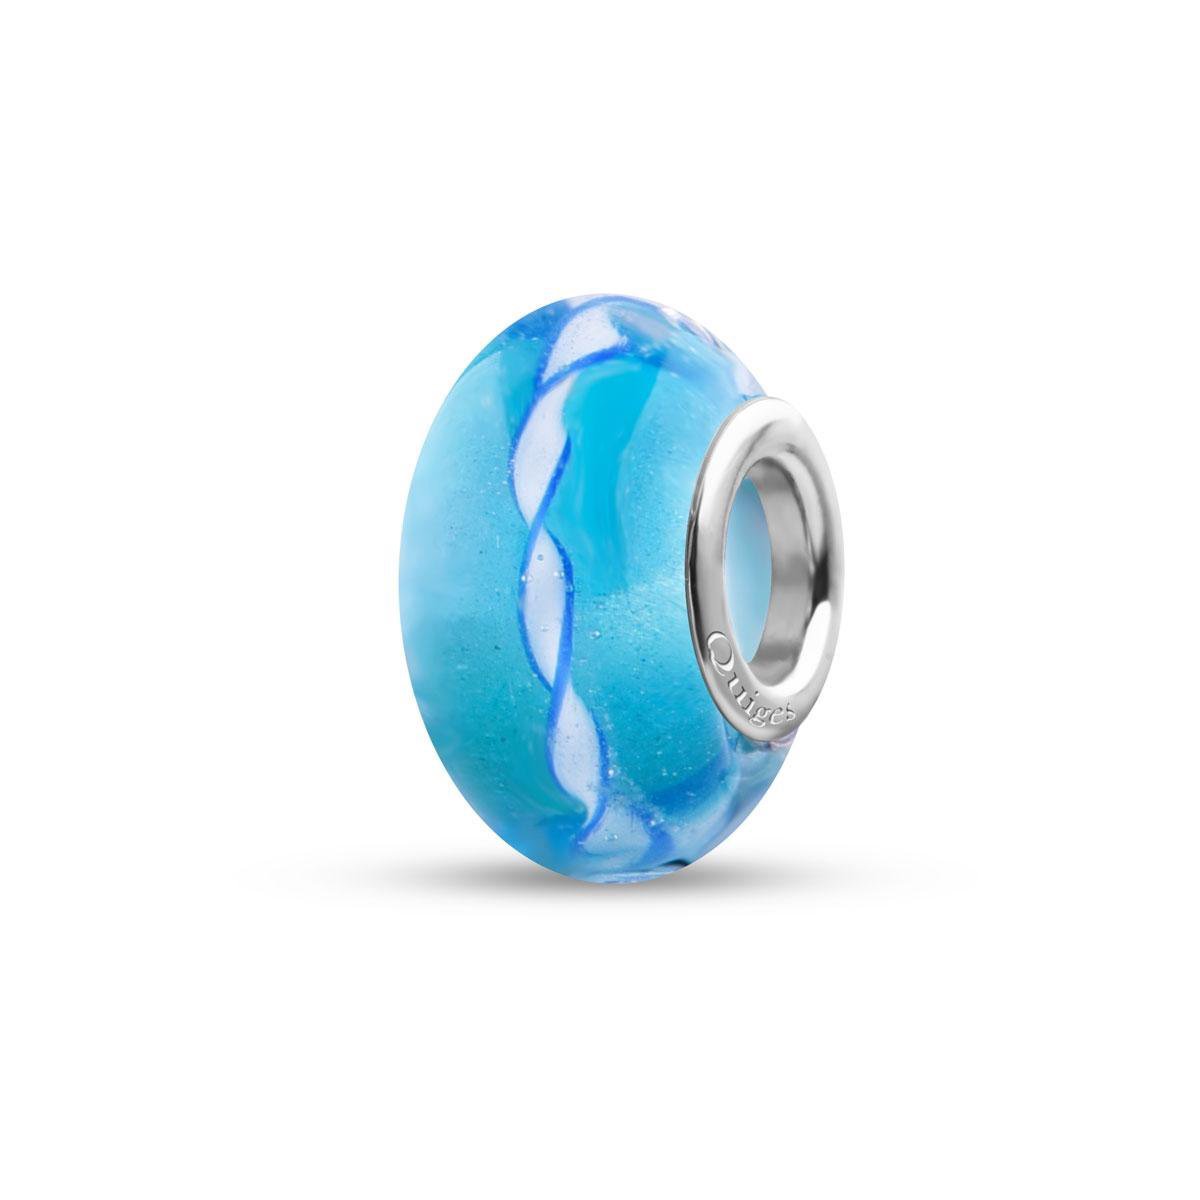 Quiges - Glazen - Kraal - Bedels - Beads Blauw Transparant met Witte Gedraaide Slinger Past op alle bekende merken armband NG661 - Quiges